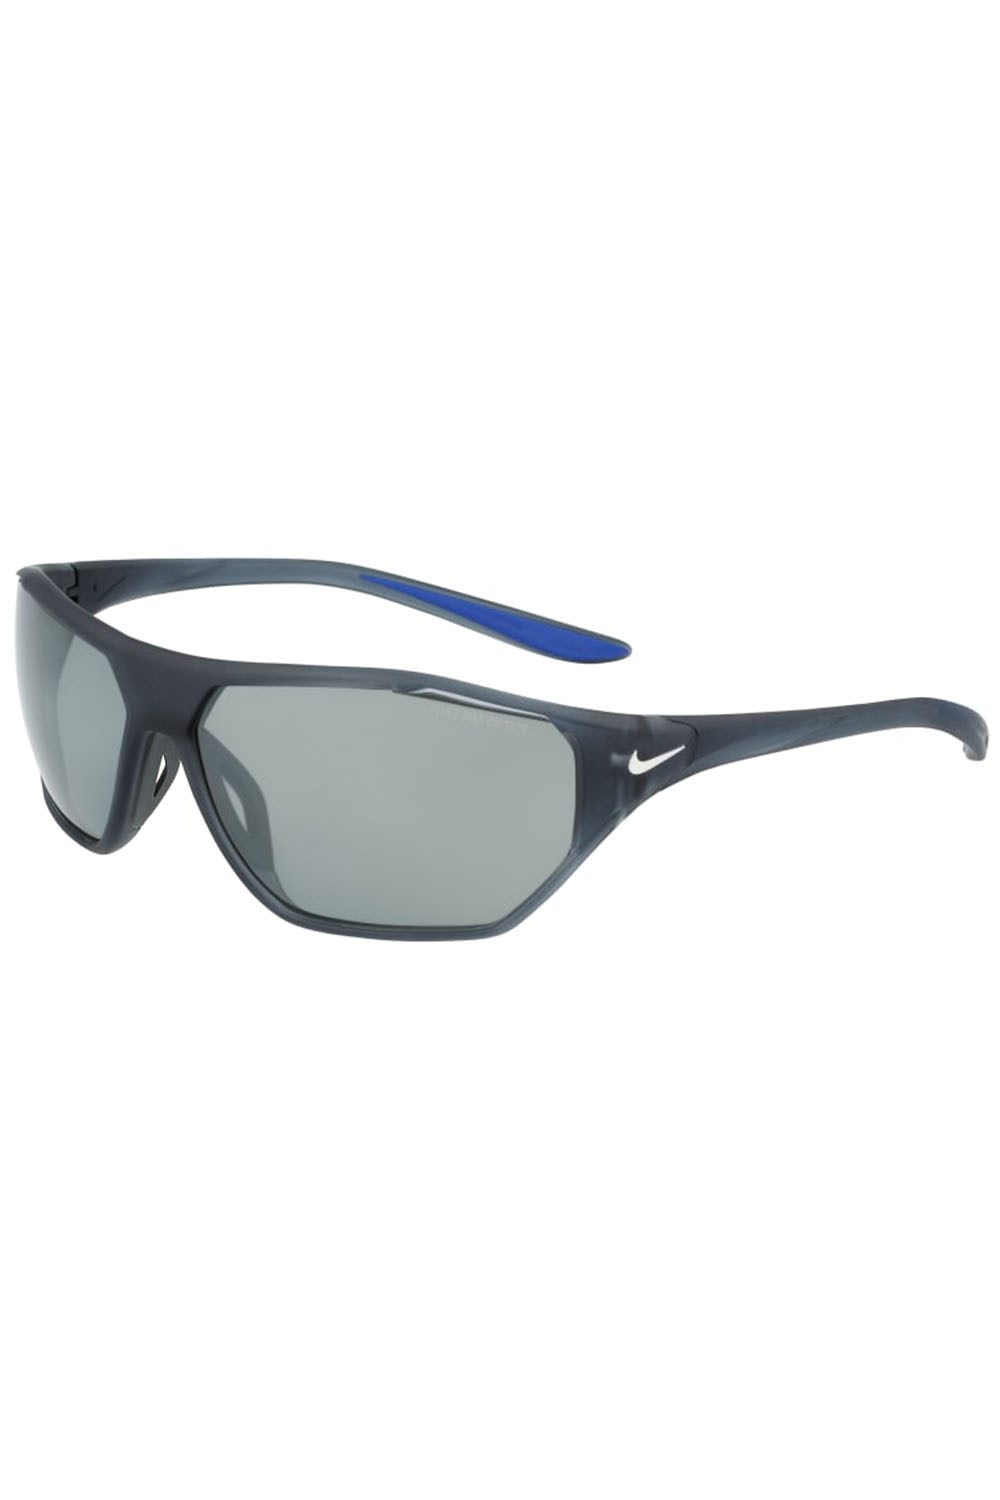 Aero Drift Unisex Sunglasses -